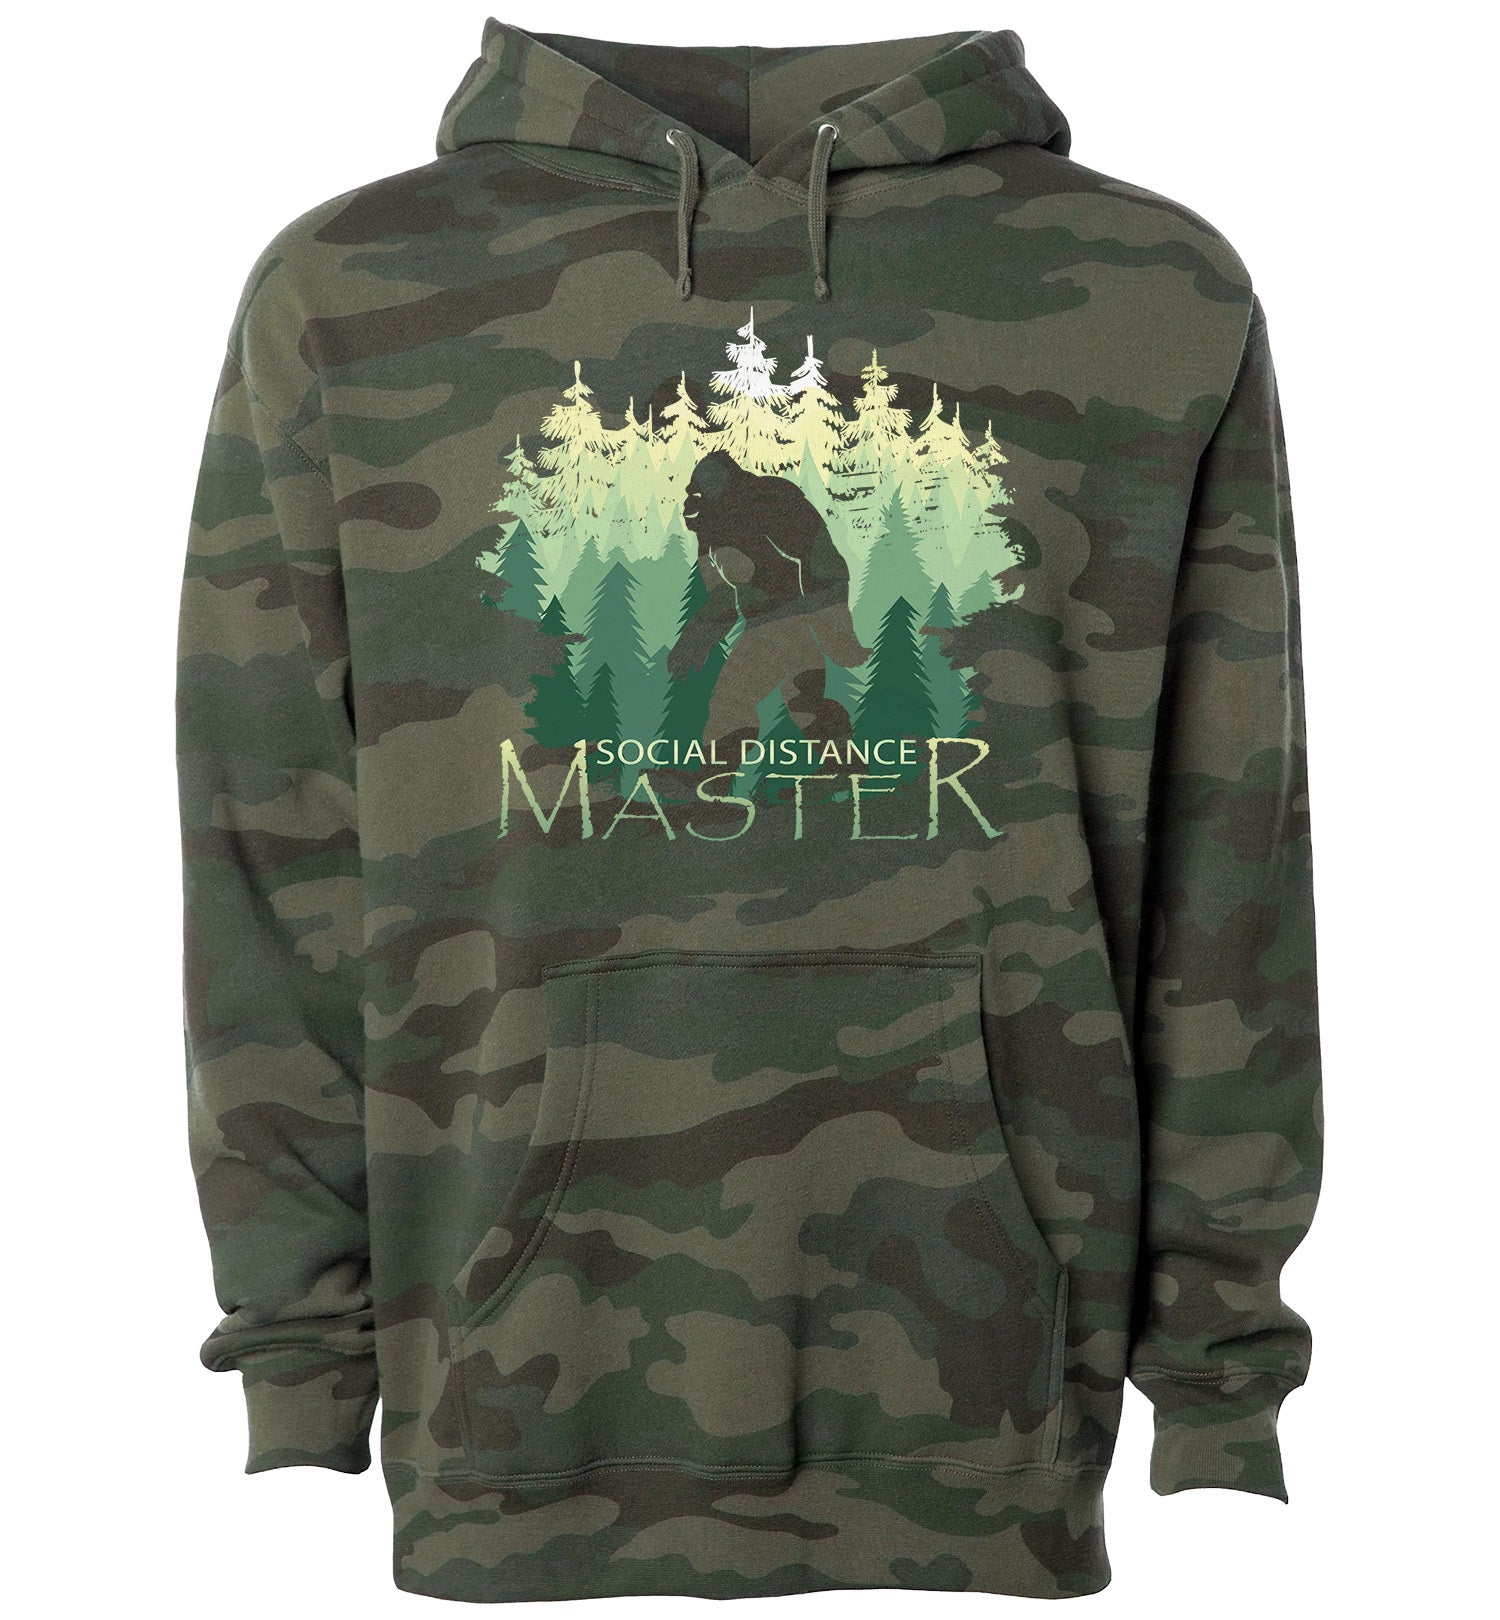 Bigfoot Sweatshirt - Social Distance Master - Pullover Hoodie - Front - Forest Camo